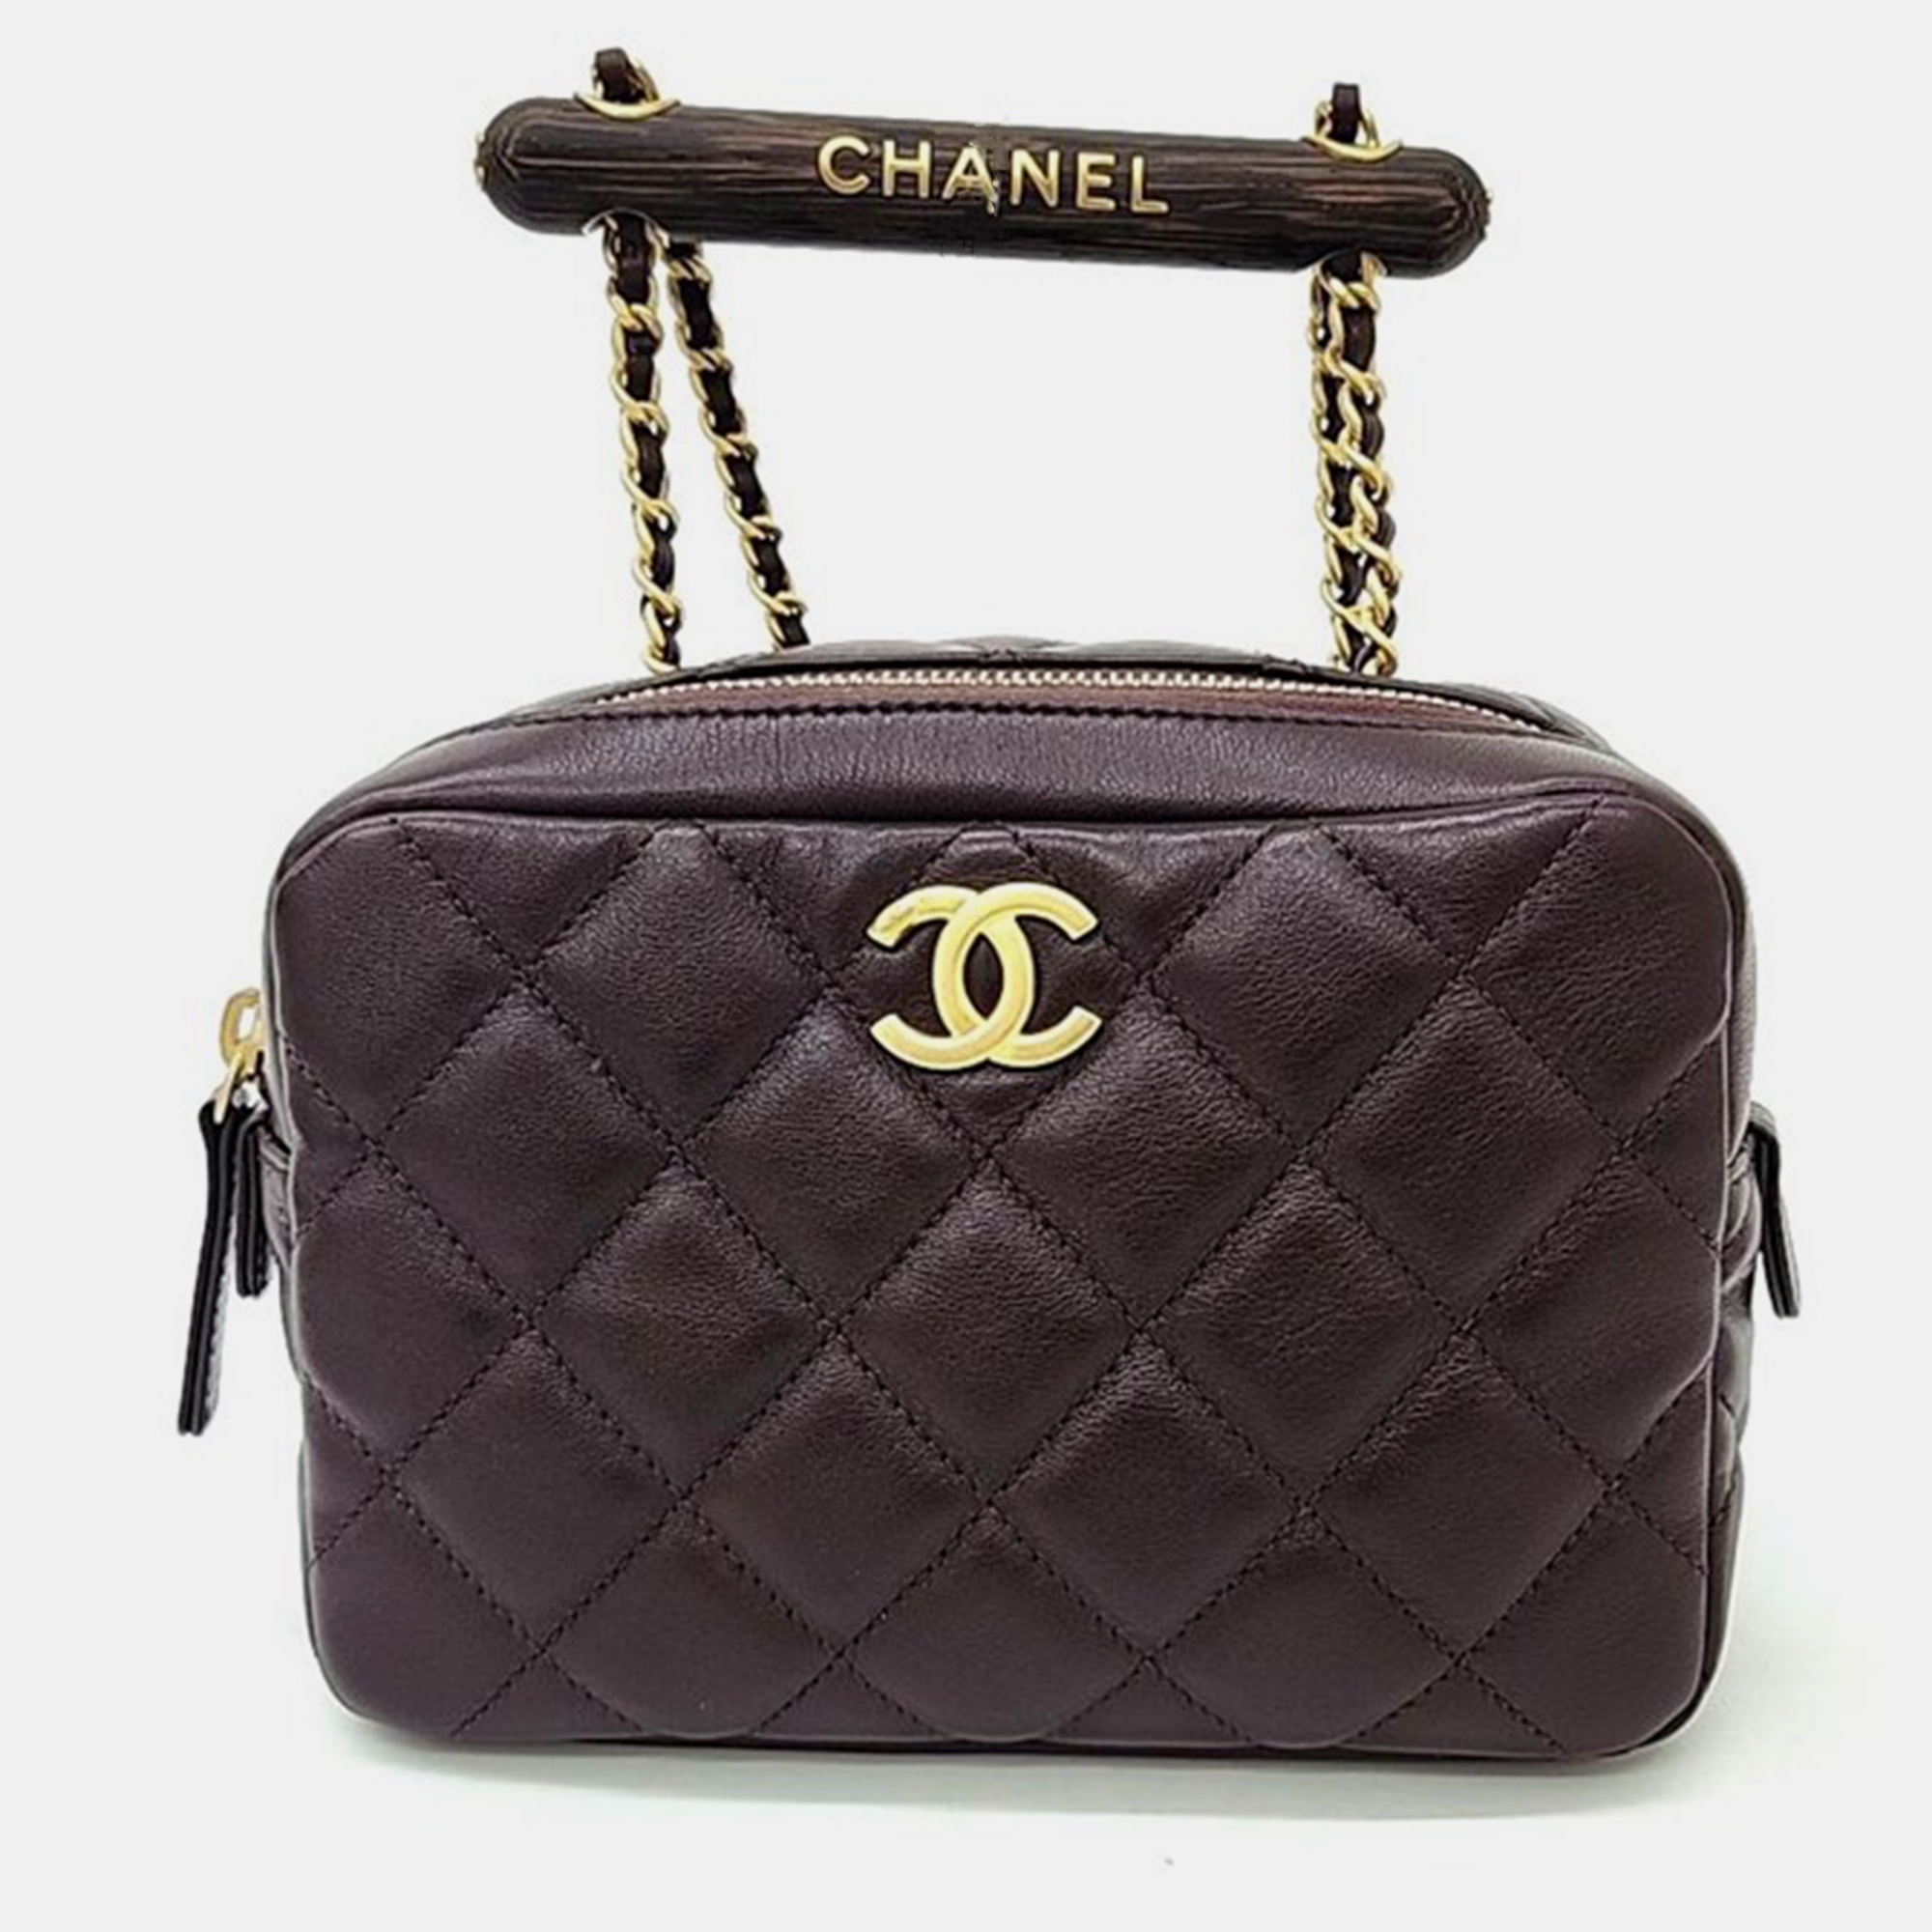 Chanel leather burgundy mini bowling bag